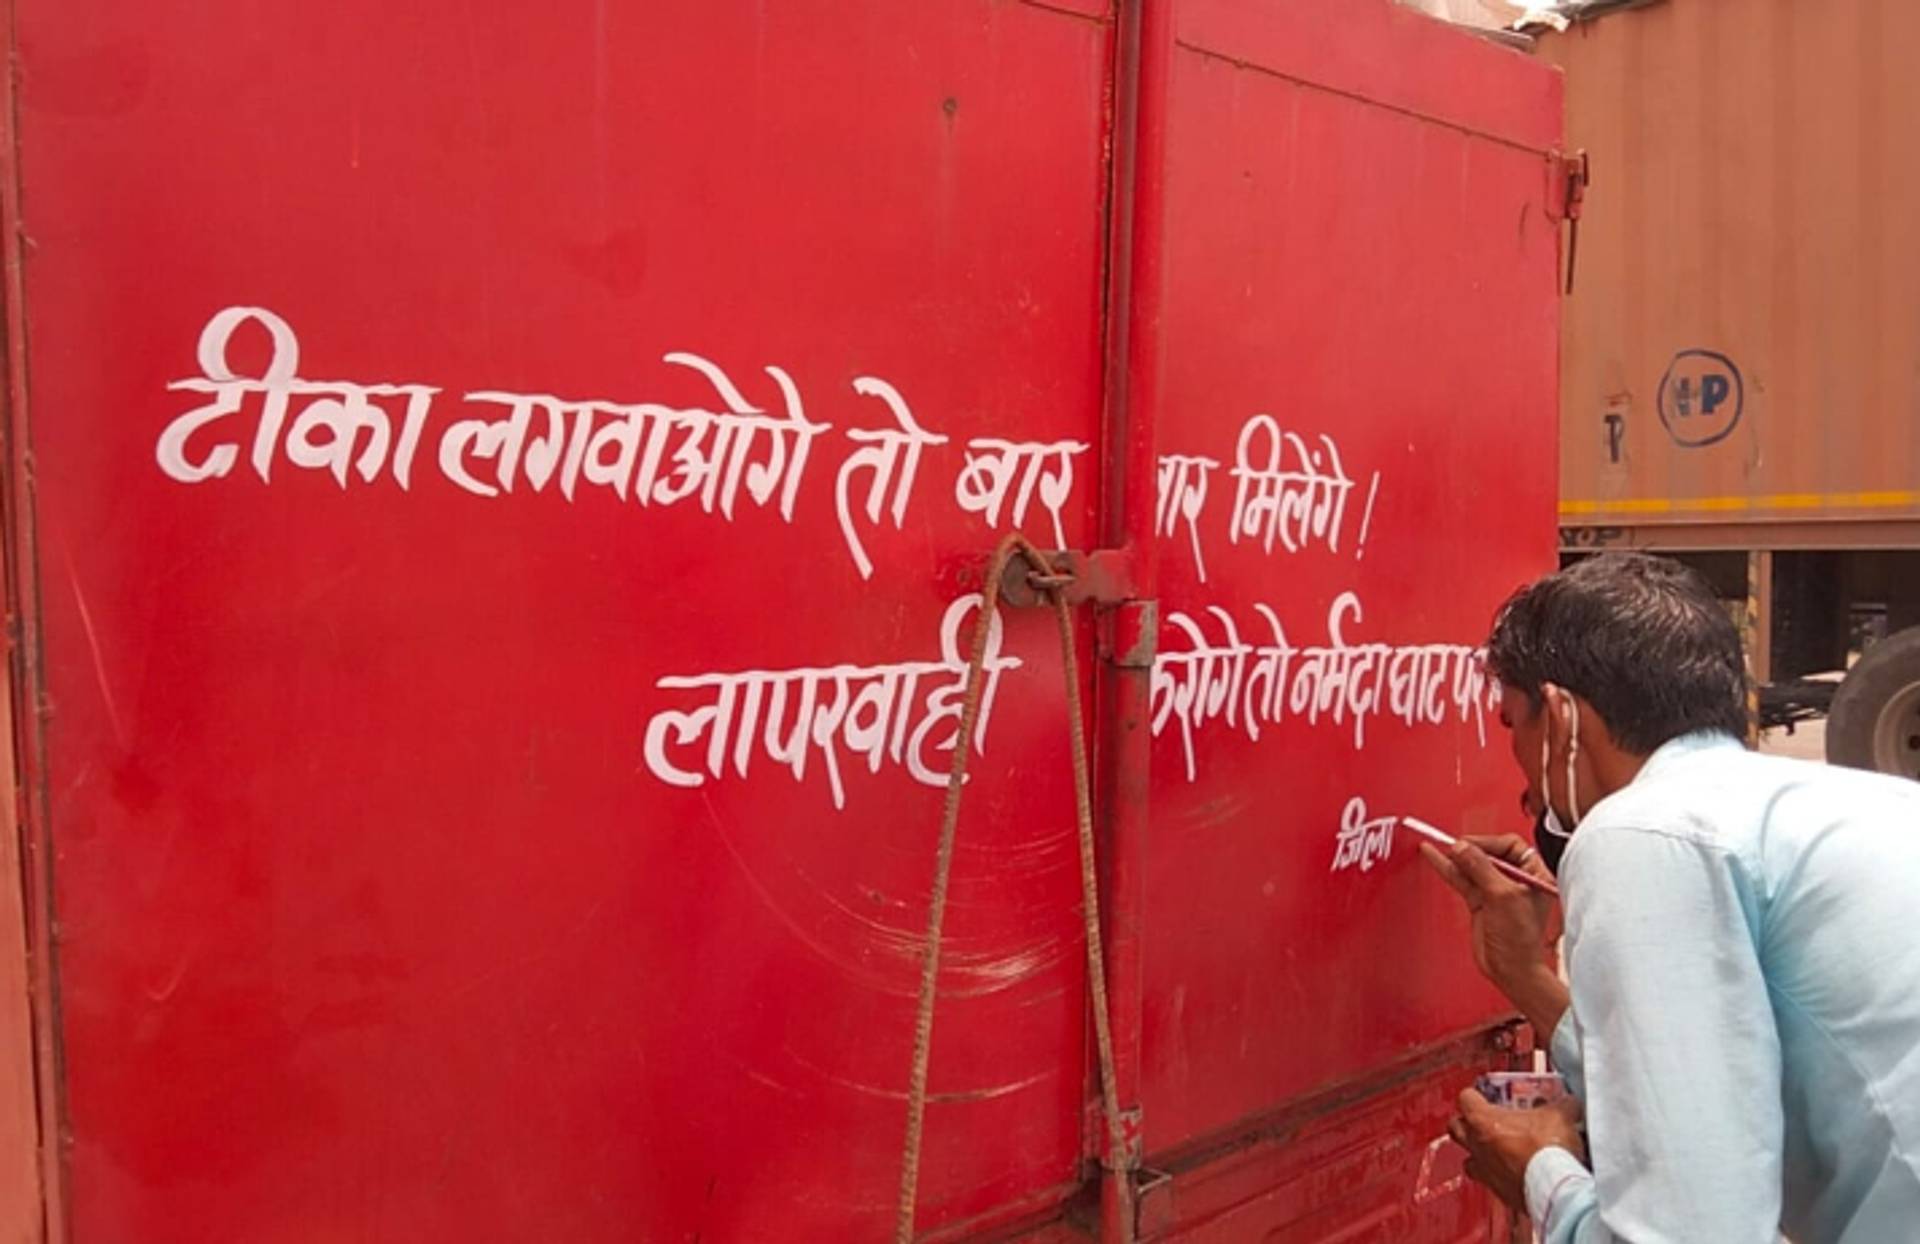 India's truck drivers help fight vaccine hesitancy